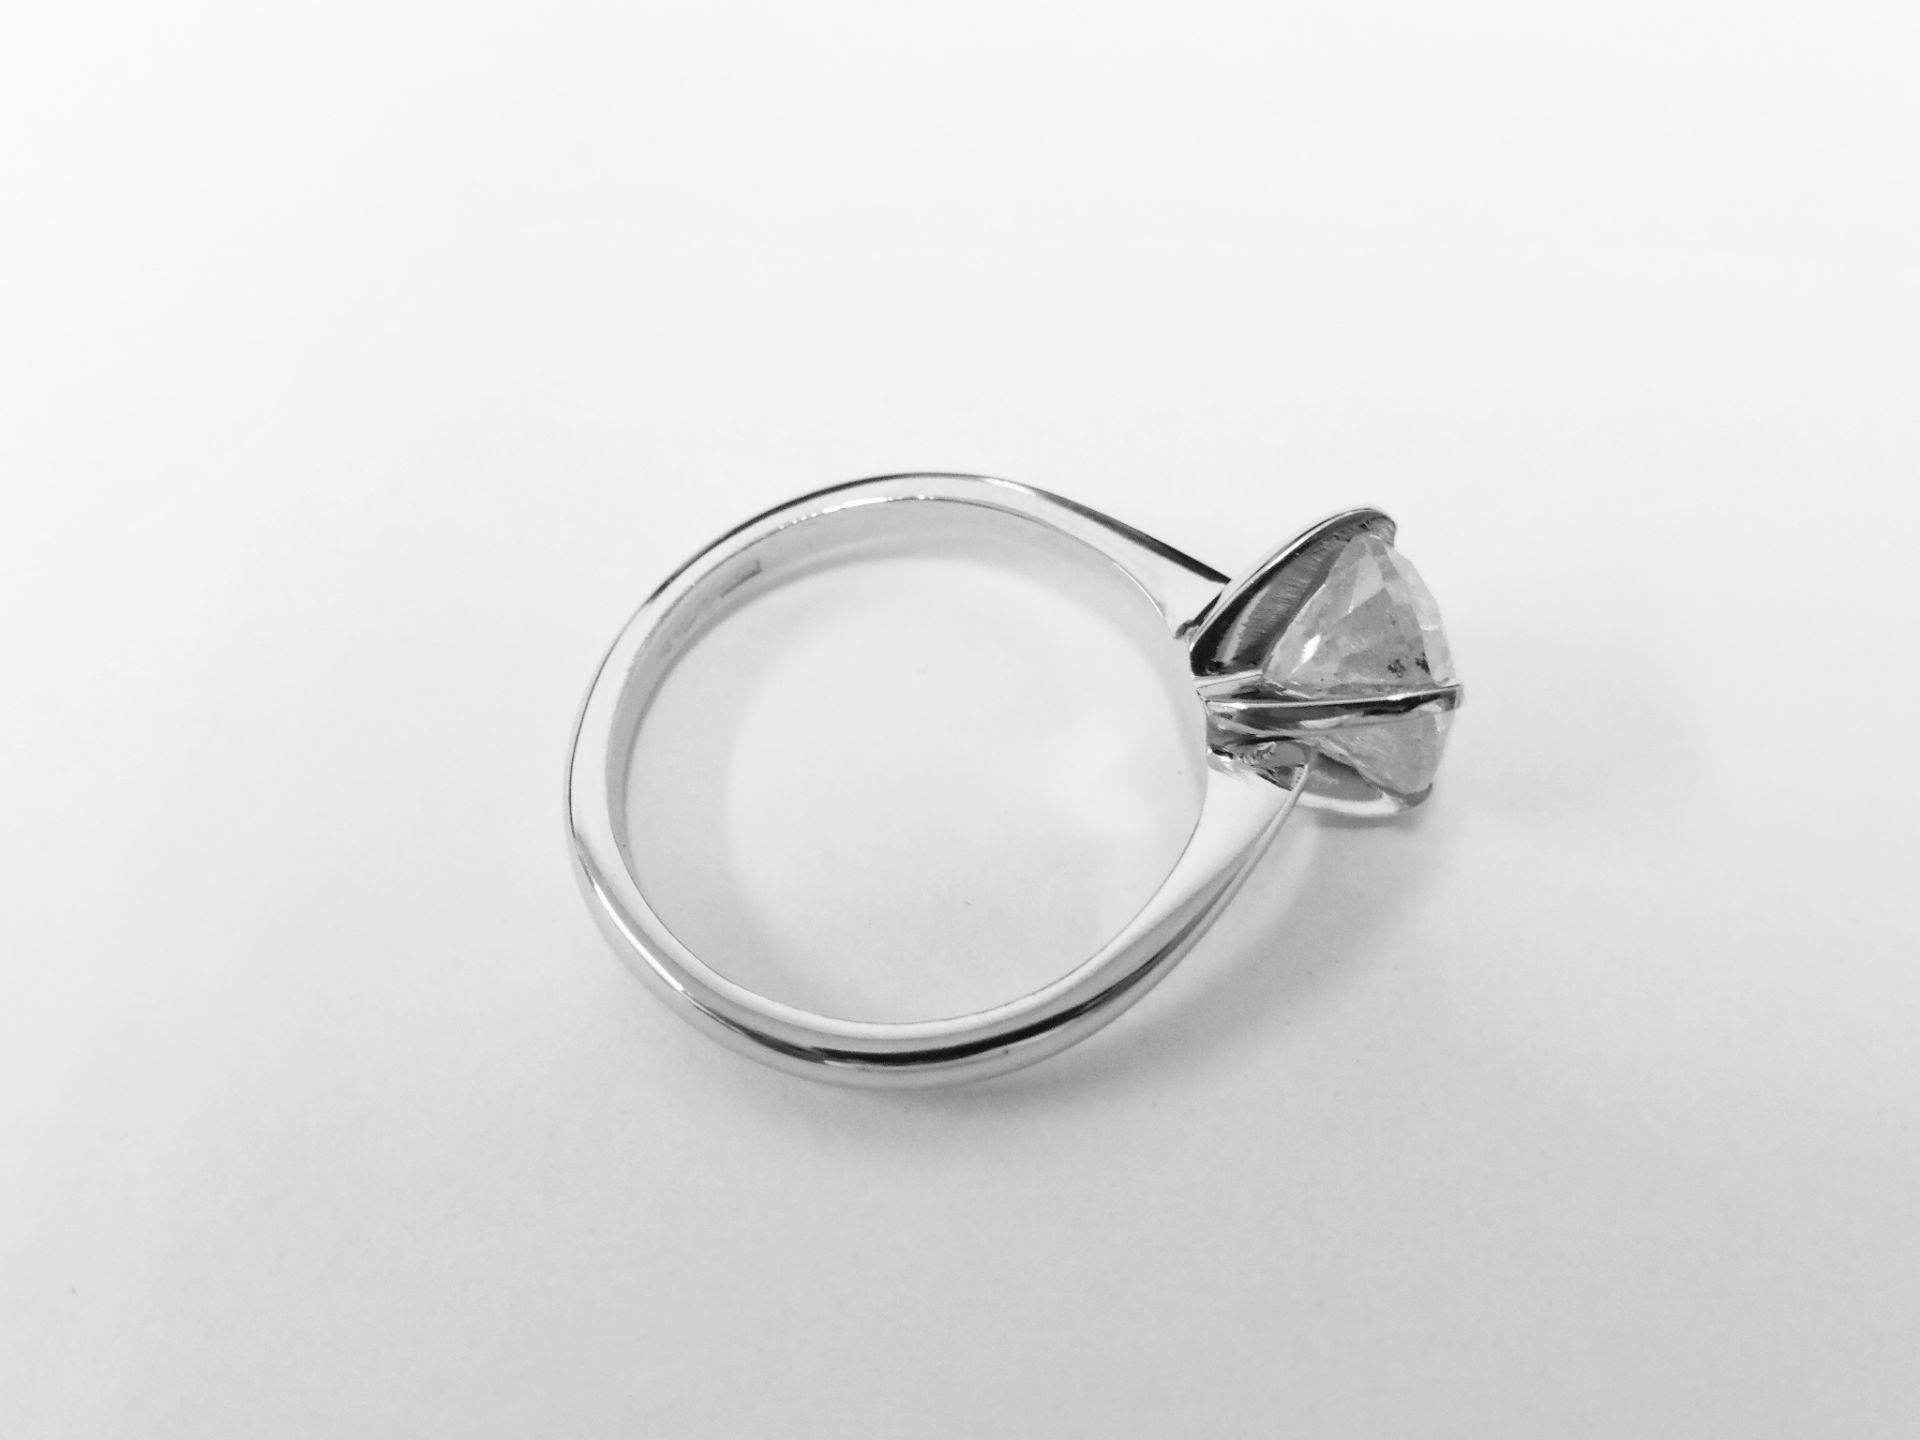 1.35ct diamond Solitaire ring ,1.35ct H colour i2 clarity (enhanced) brilliant cut diamond, - Image 3 of 5